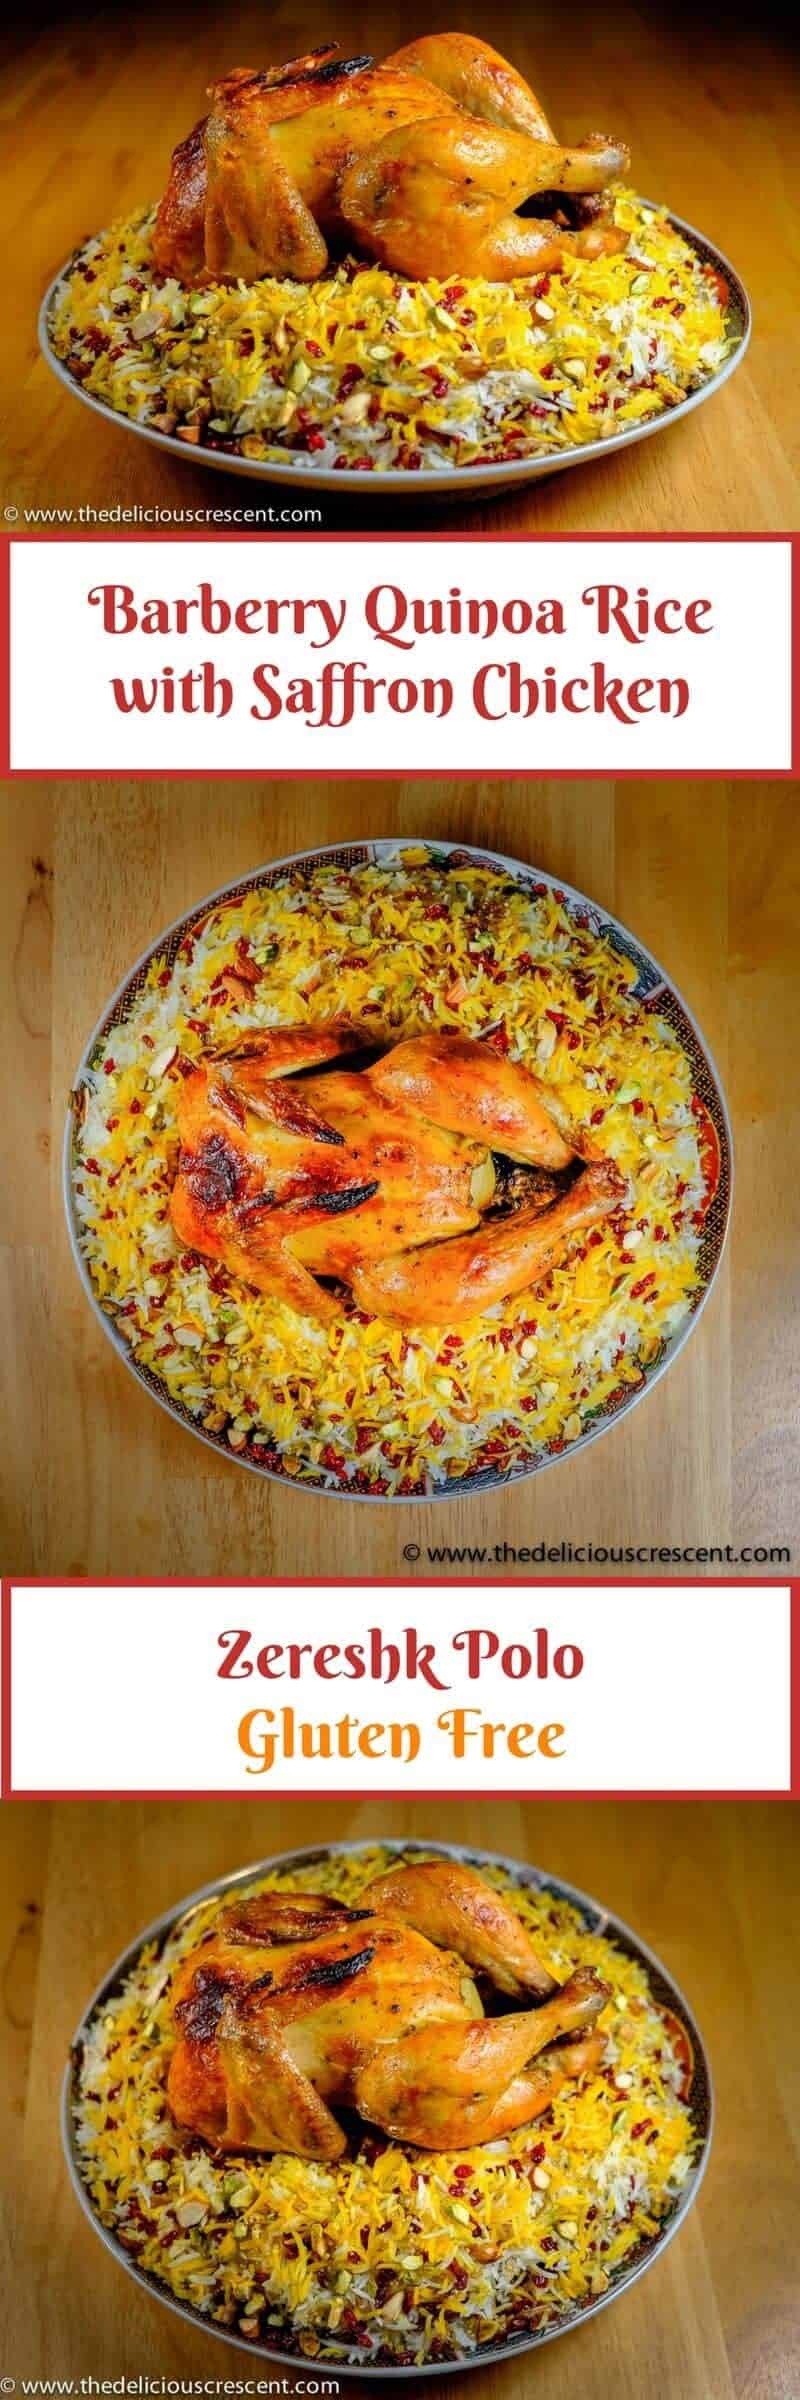 Zereshk Polo (Barberry Rice with Saffron Chicken) | The Delicious Crescent